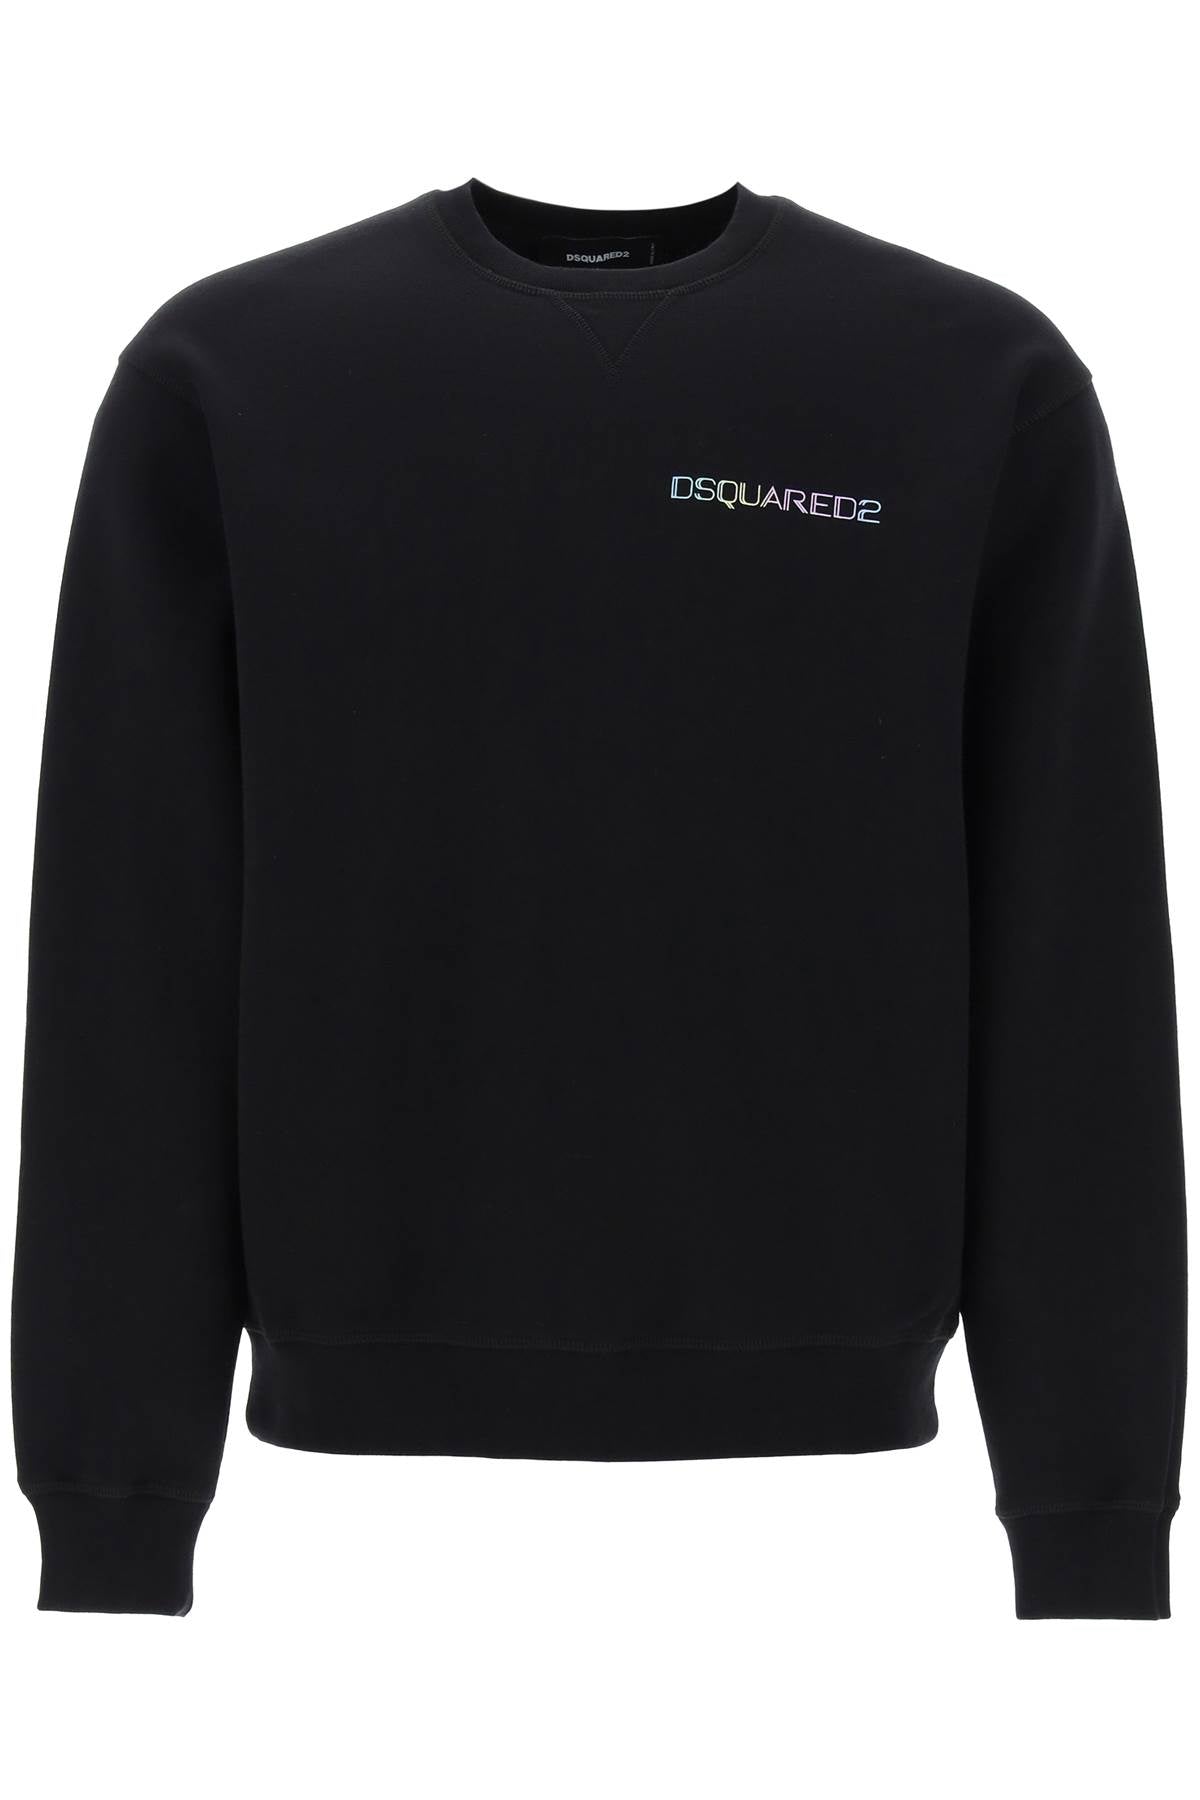 Dsquared2 cool fit printed sweatshirt-0